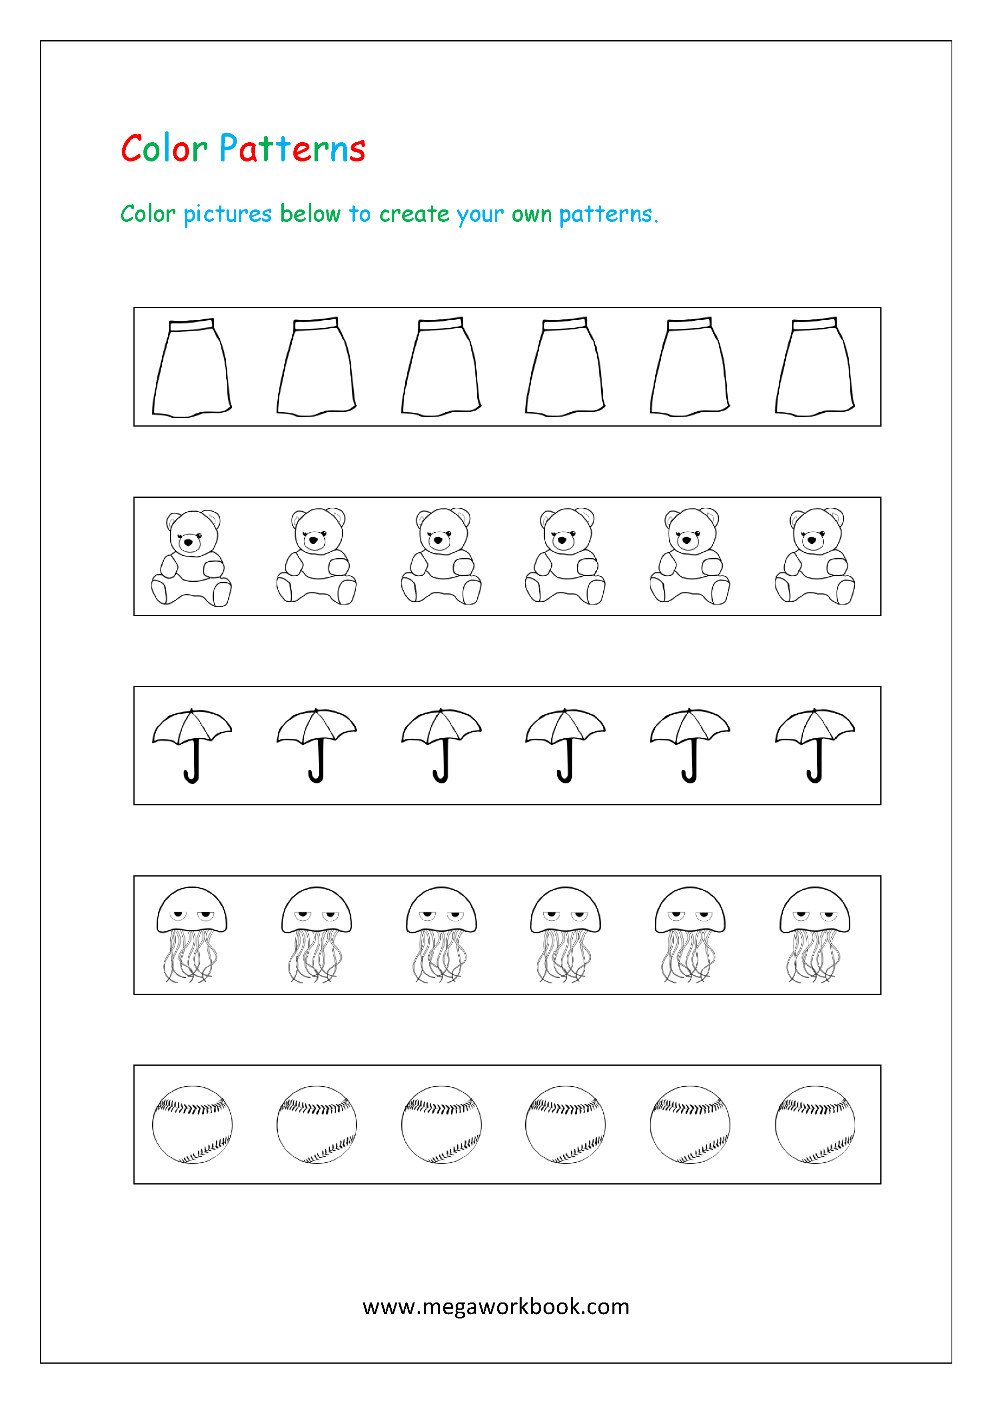 pattern worksheets for kindergarten color patterns growing patterns decreasing patterns repeating patterns worksheets ab aab abc patterns free printables preschool kindergarten megaworkbook